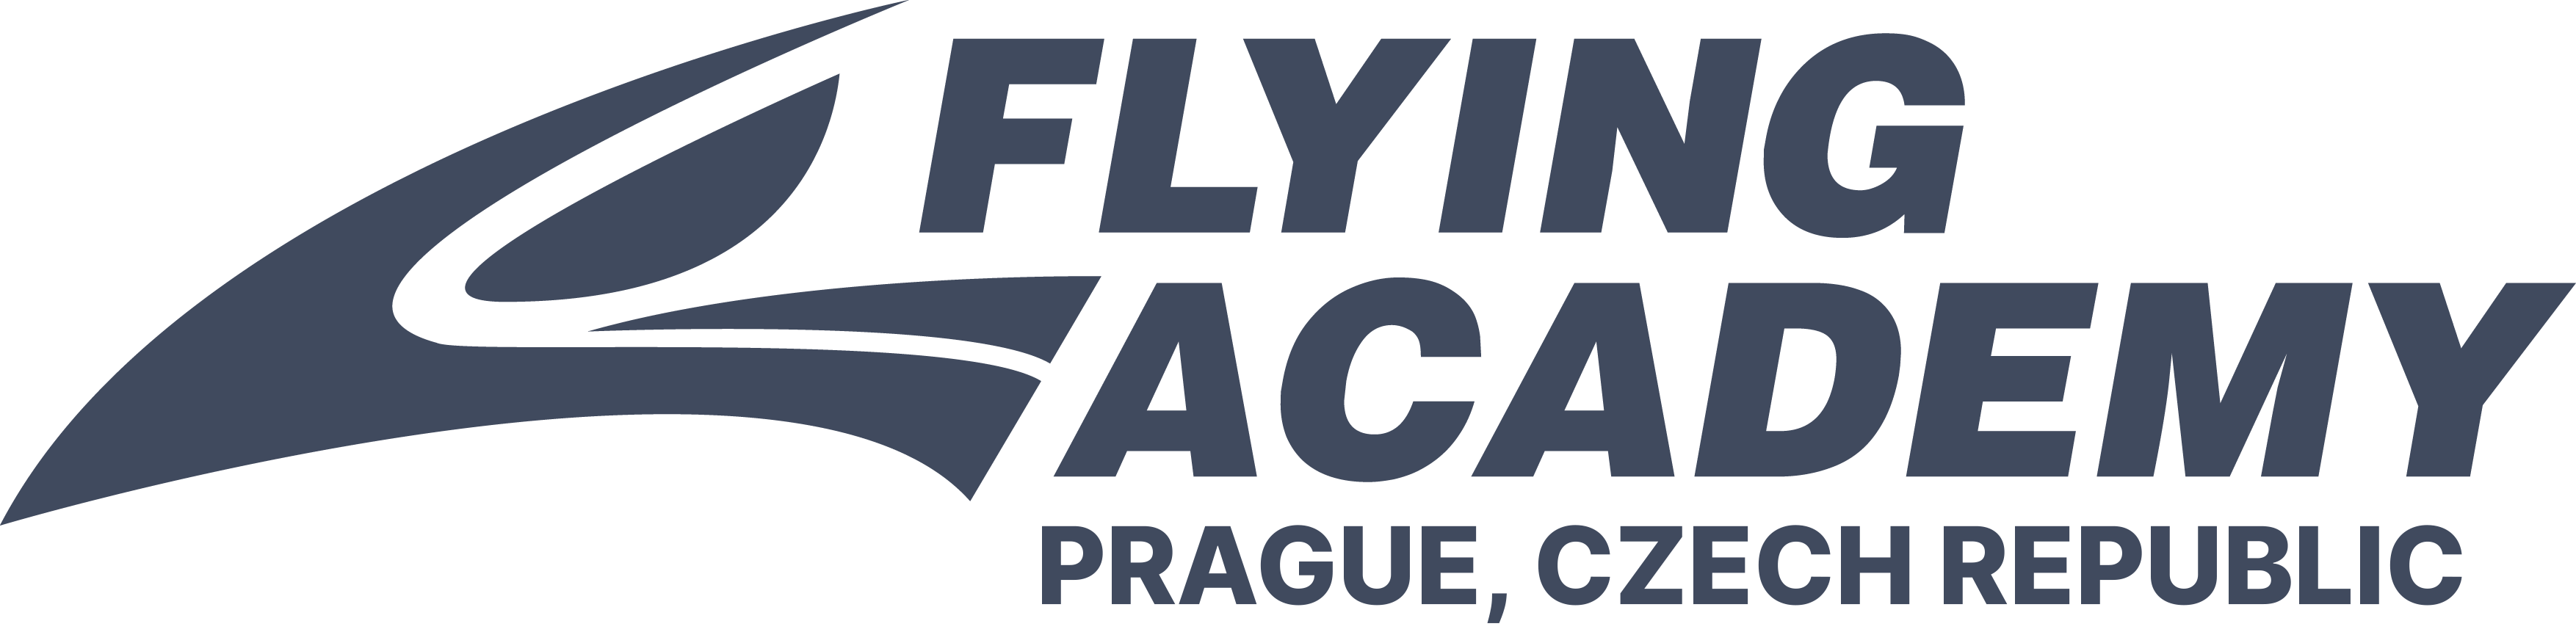 Flying Academy Prague | Professional Pilot Training